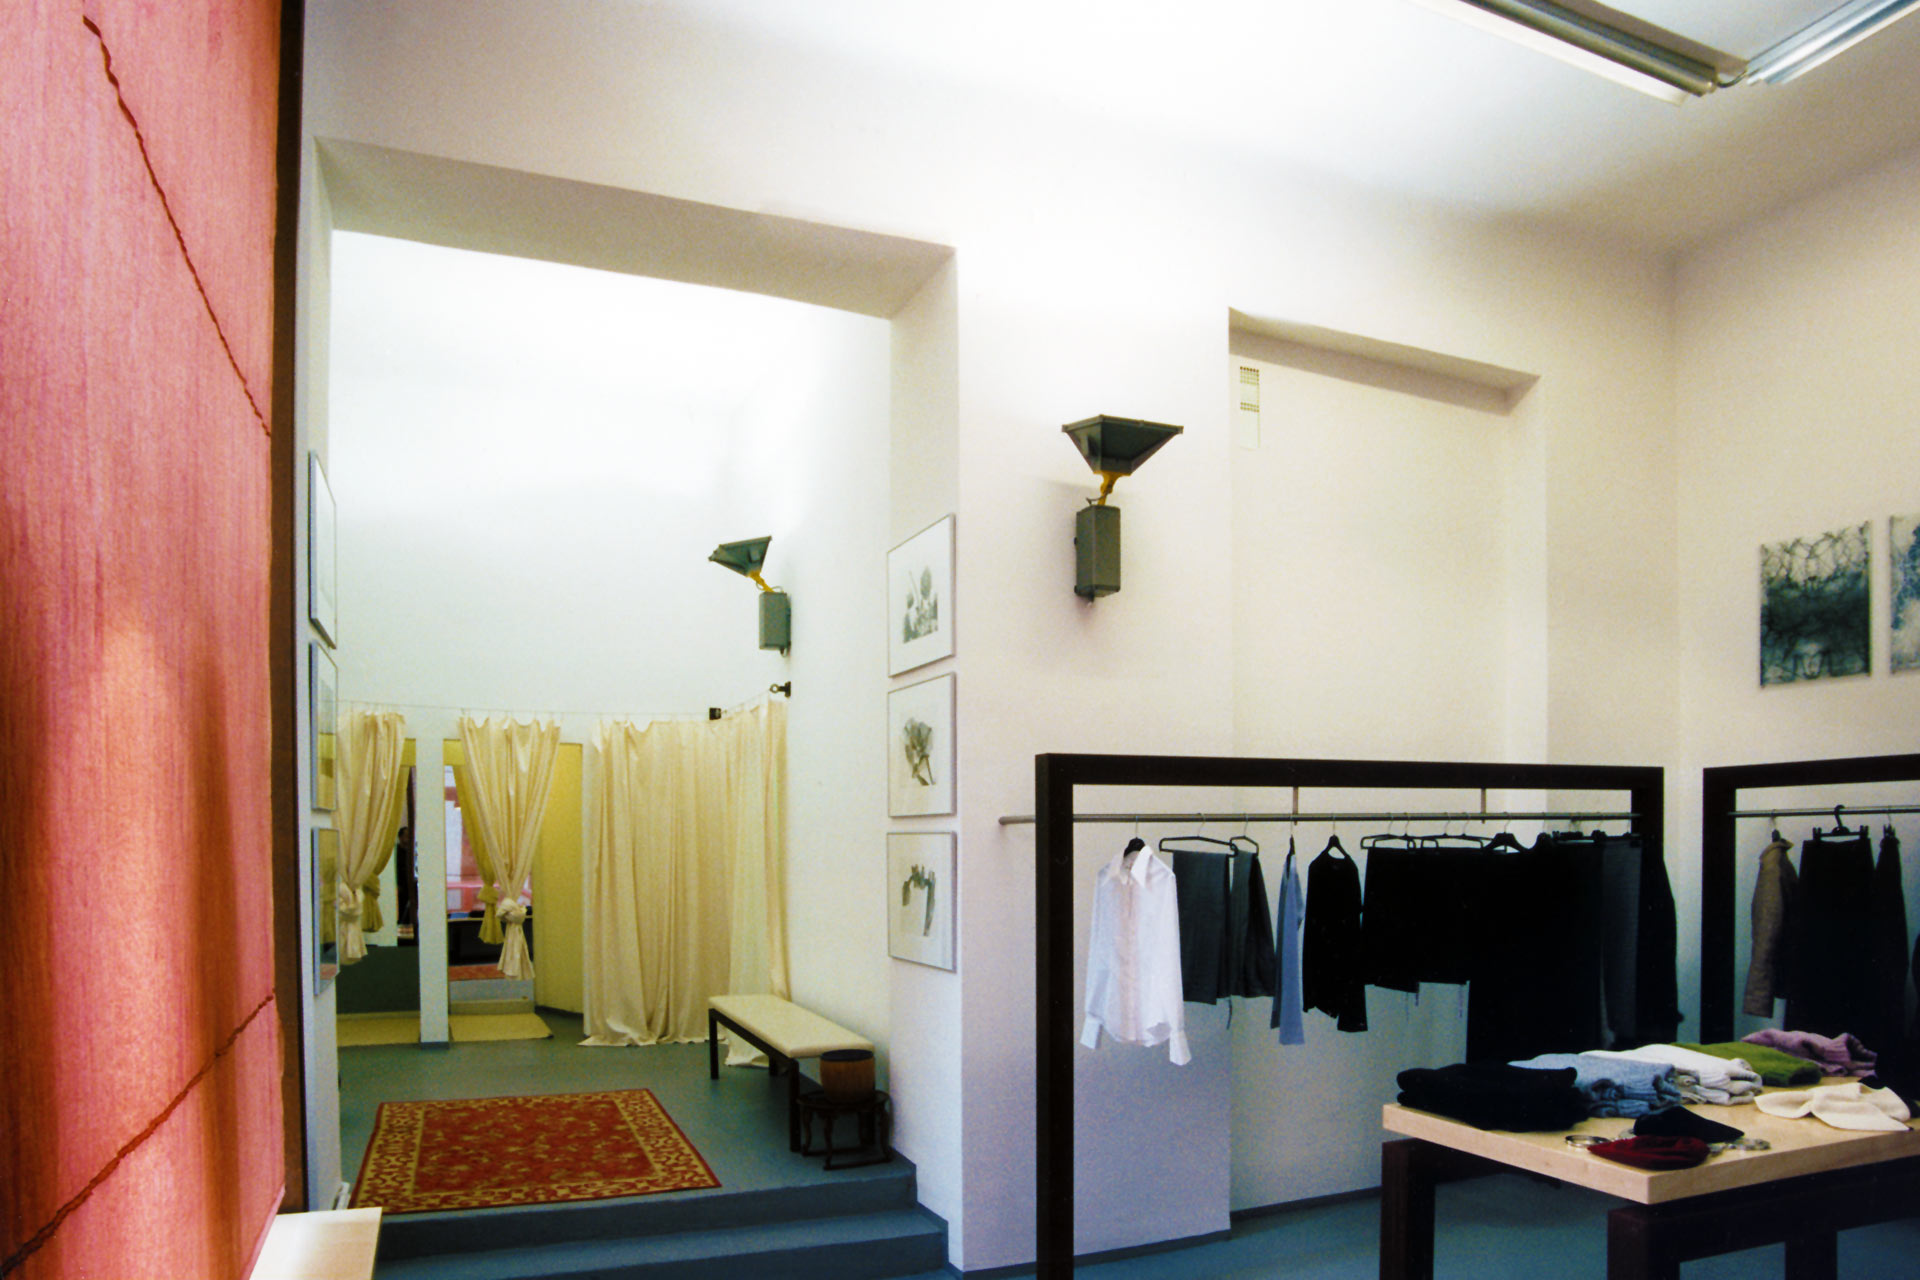 1998 - SABA SONG Boutique, A-1010 Wien